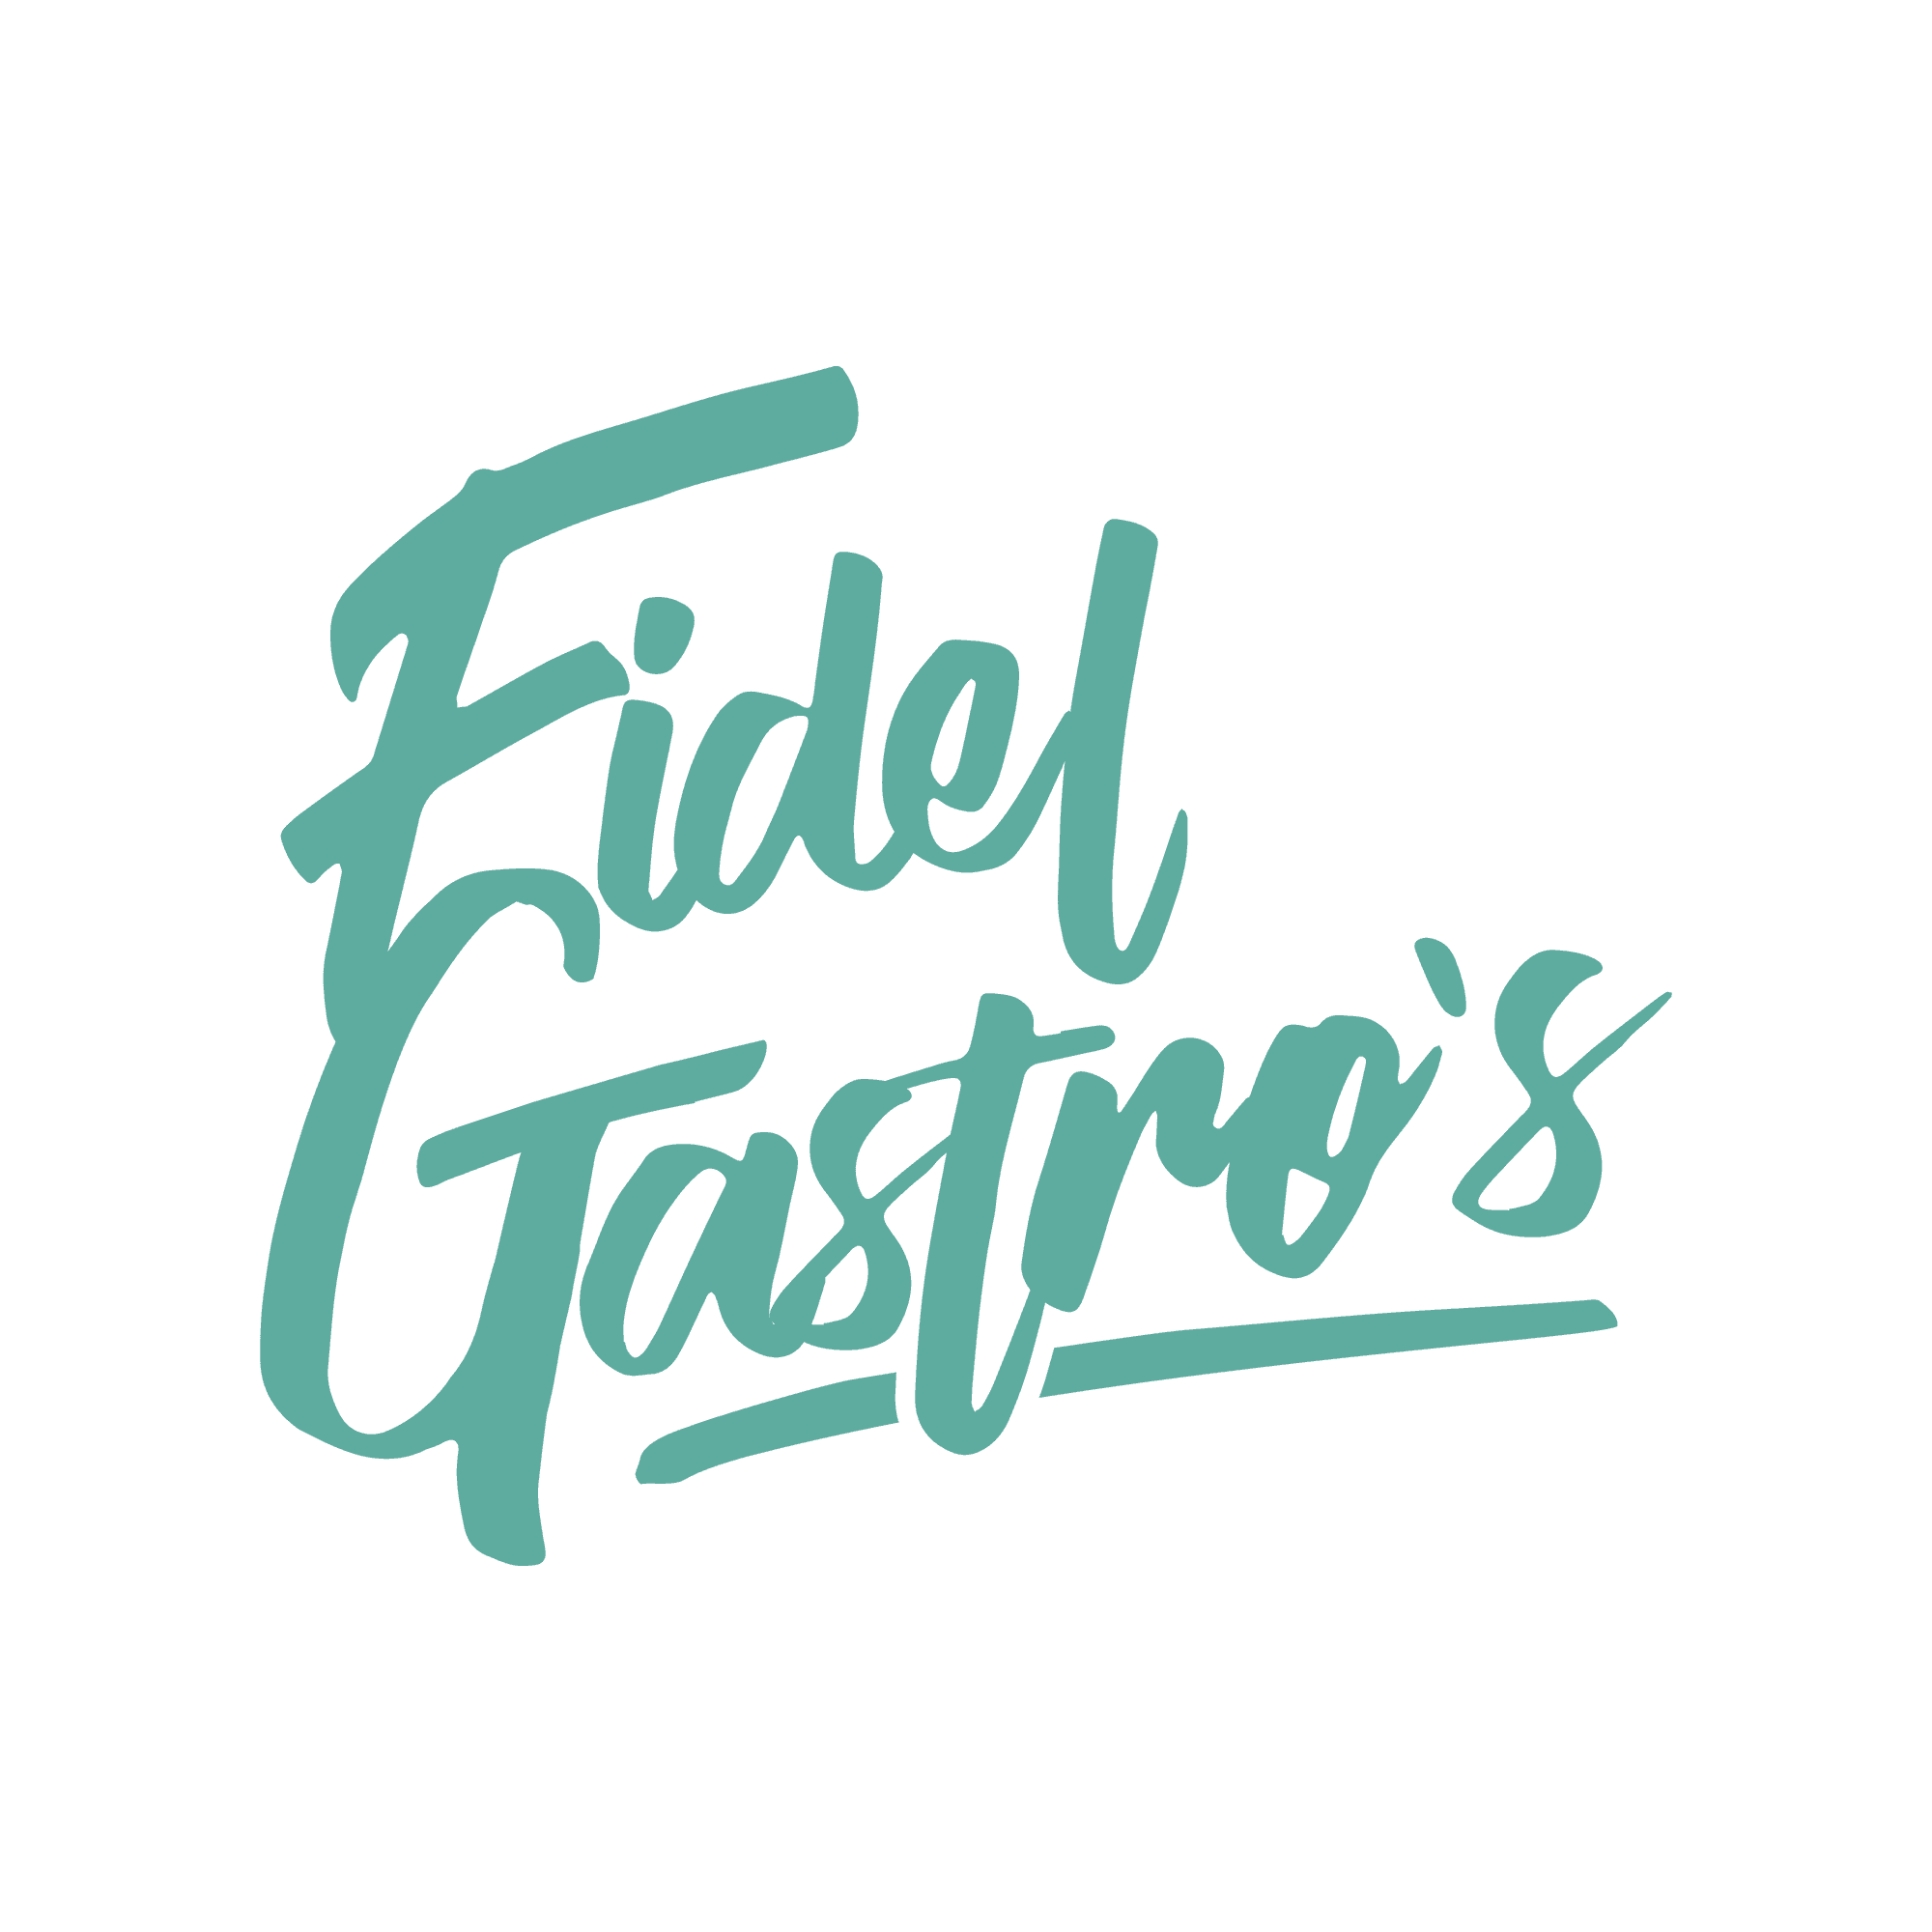 <p>Fidel Gastro's</p> logo